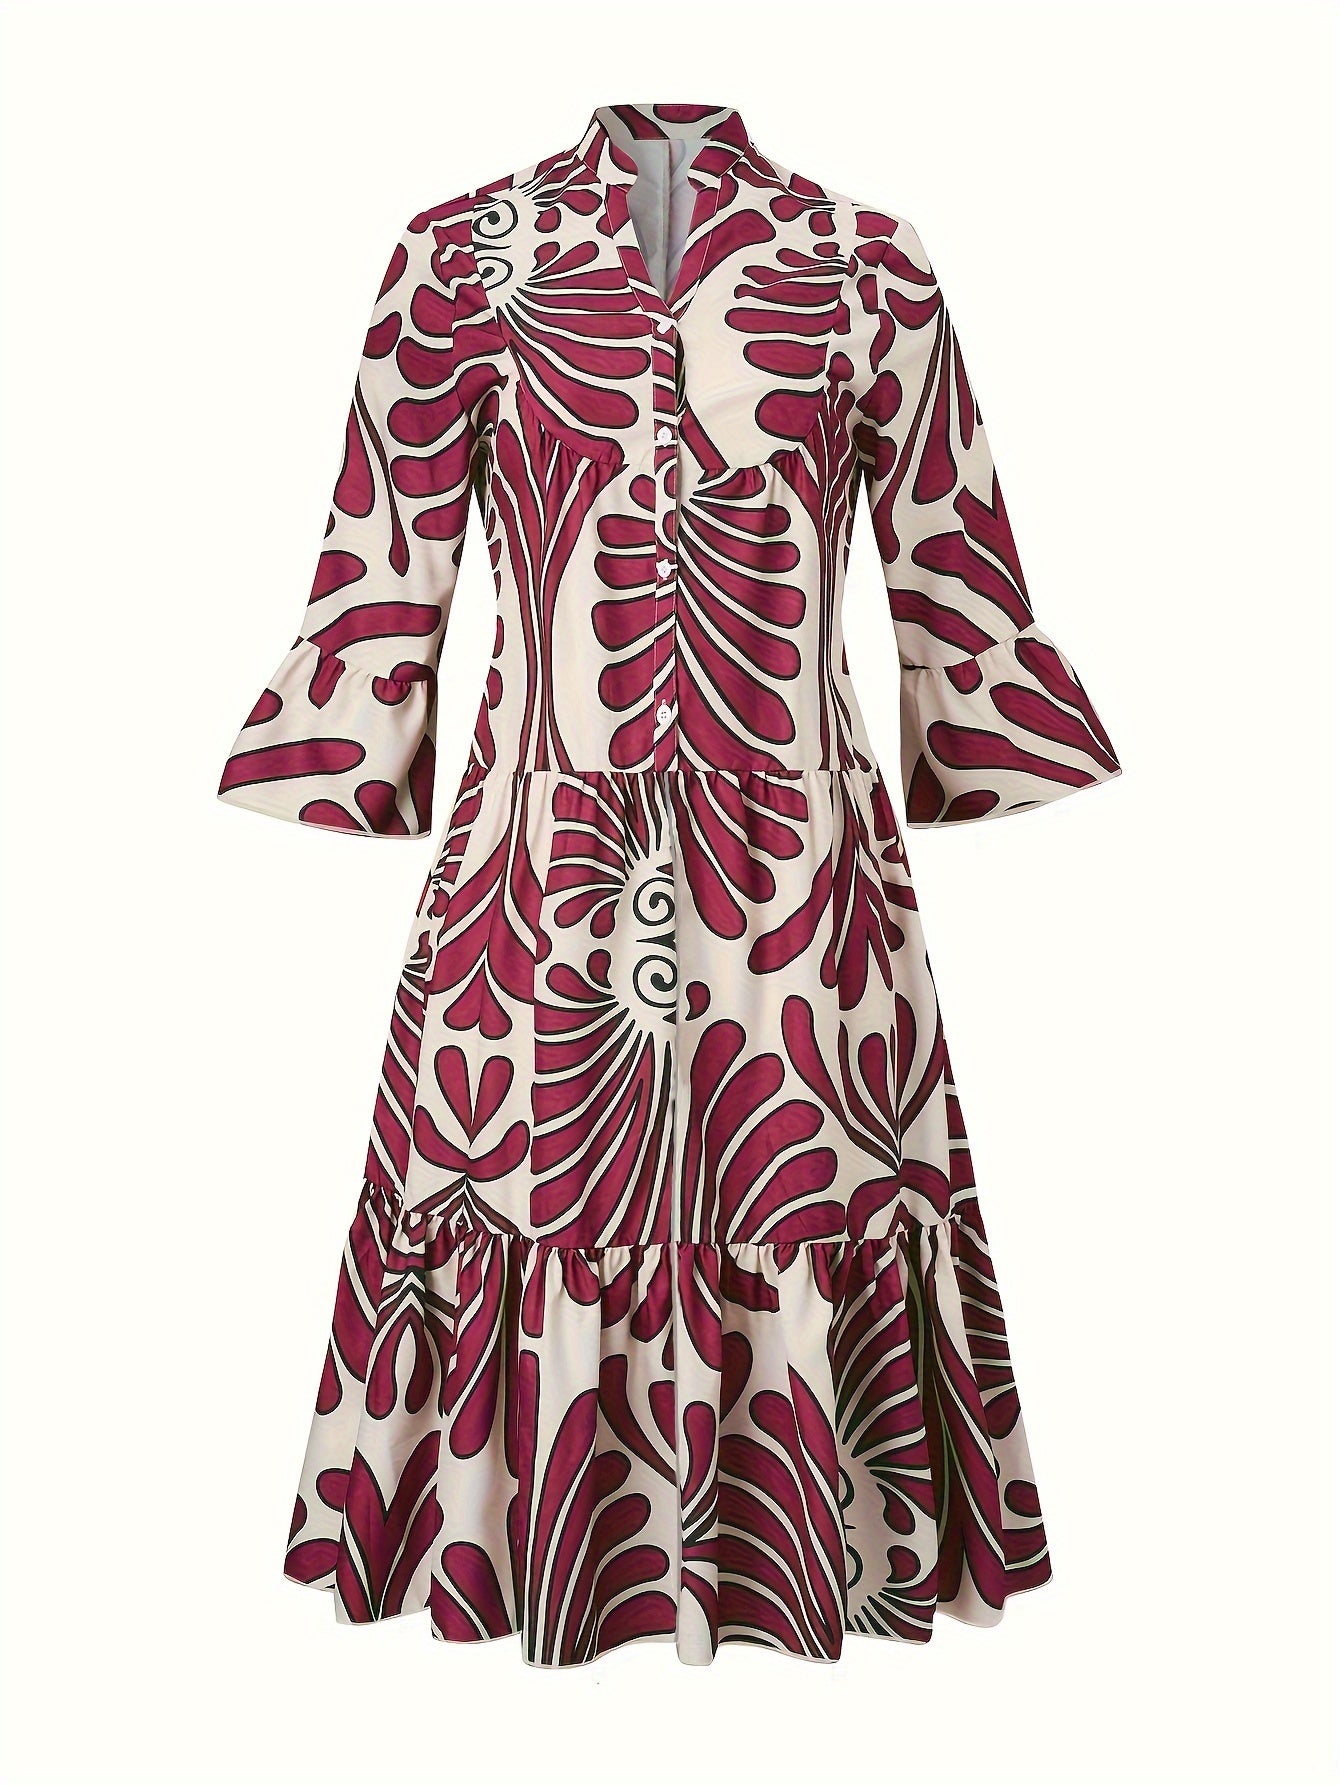 Antmvs Plus Size Elegant Dress, Women's Plus Allover Print Bell Sleeve Button Up Mock Neck Maxi Smock Dress